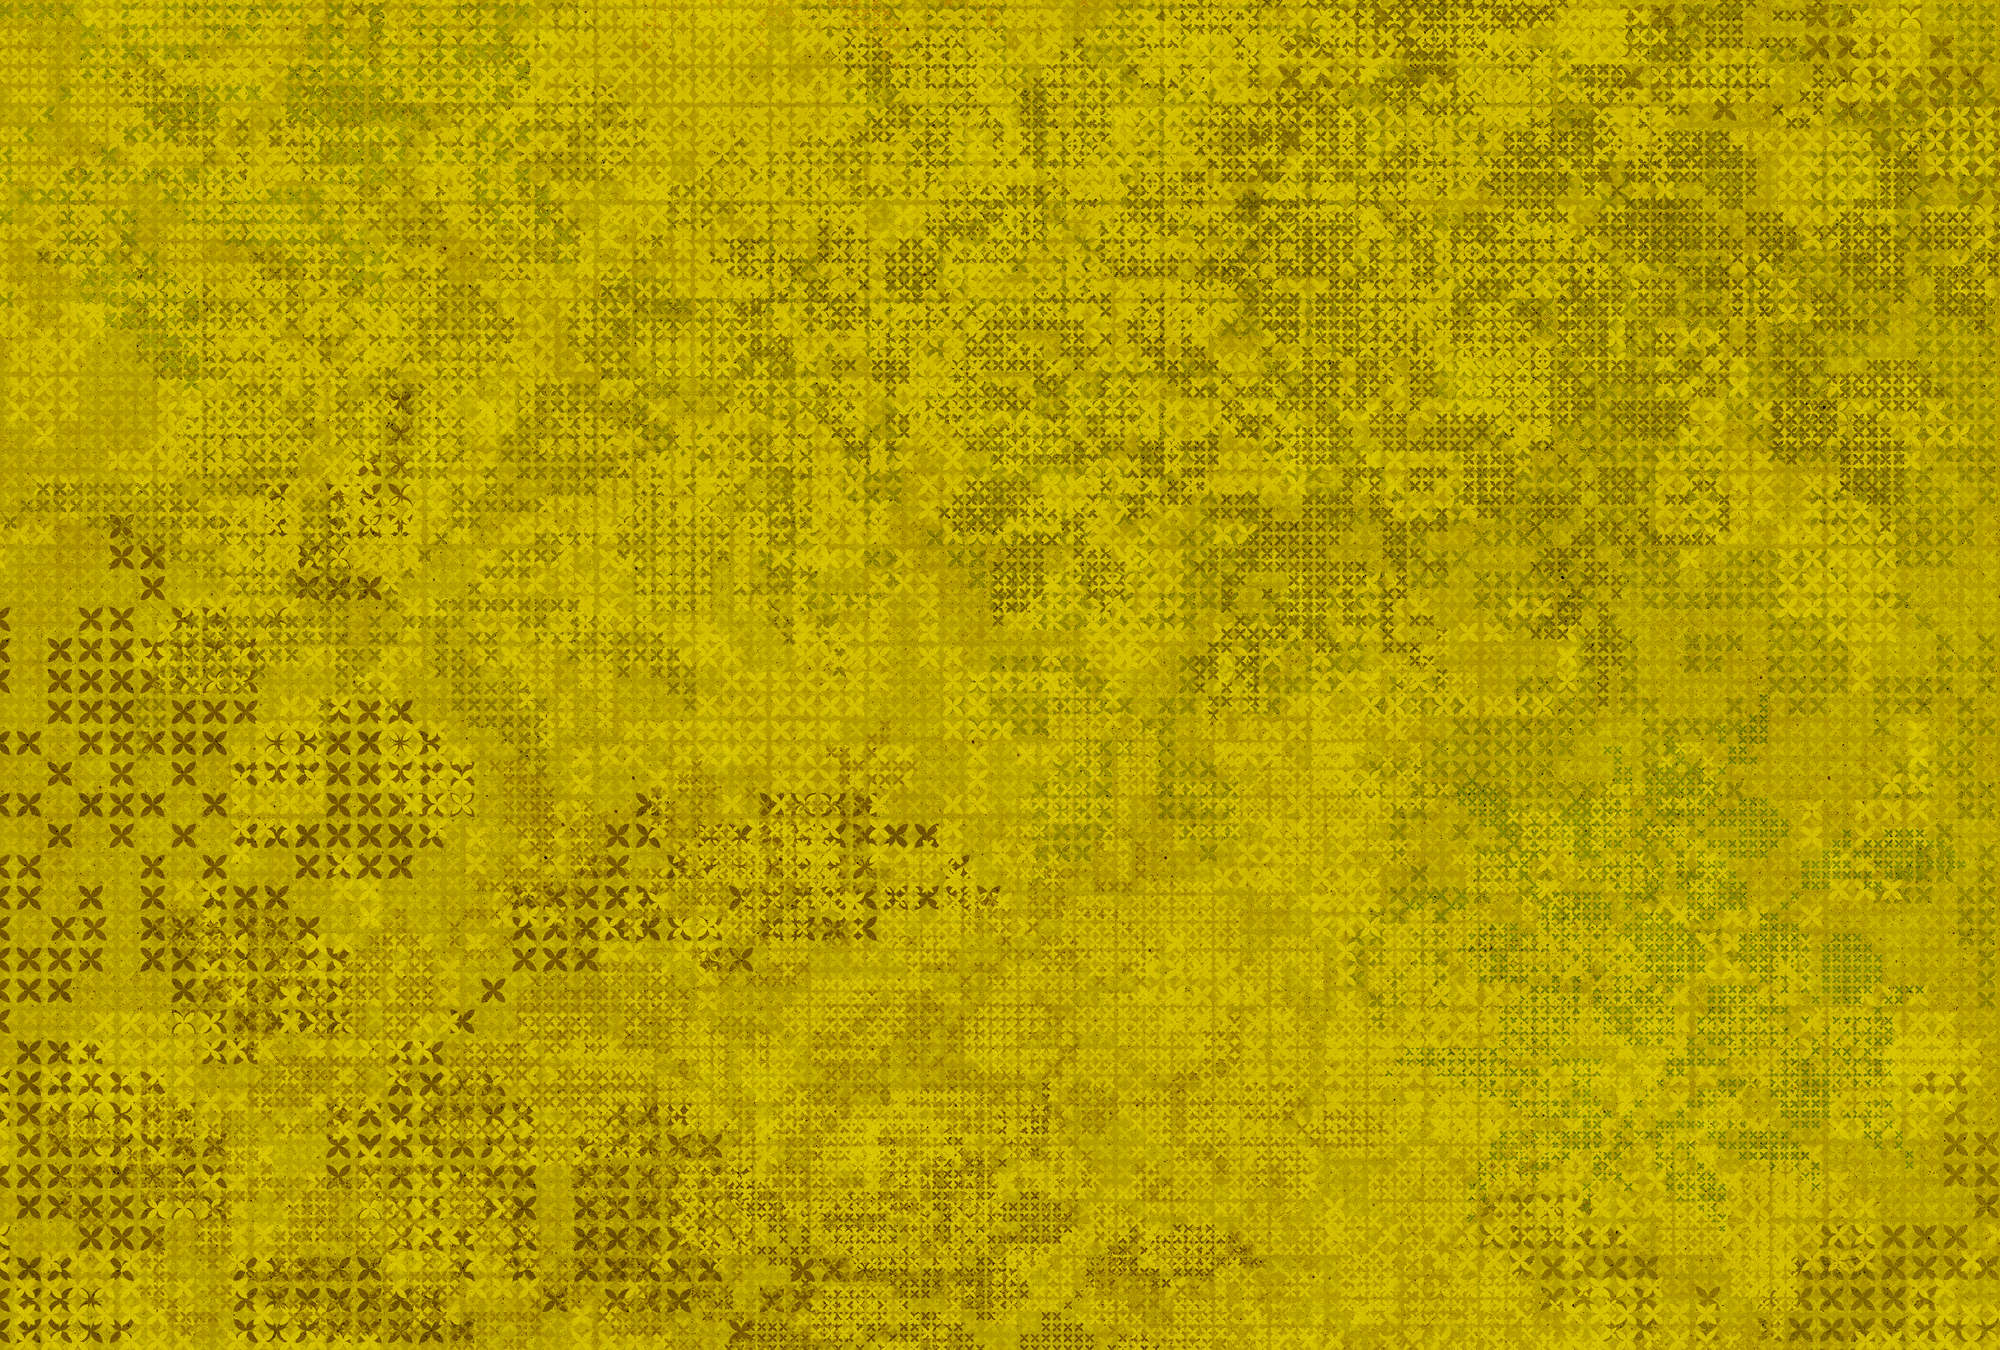             Pixel Fototapete Kreuzstich Muster – Walls by Patel
        